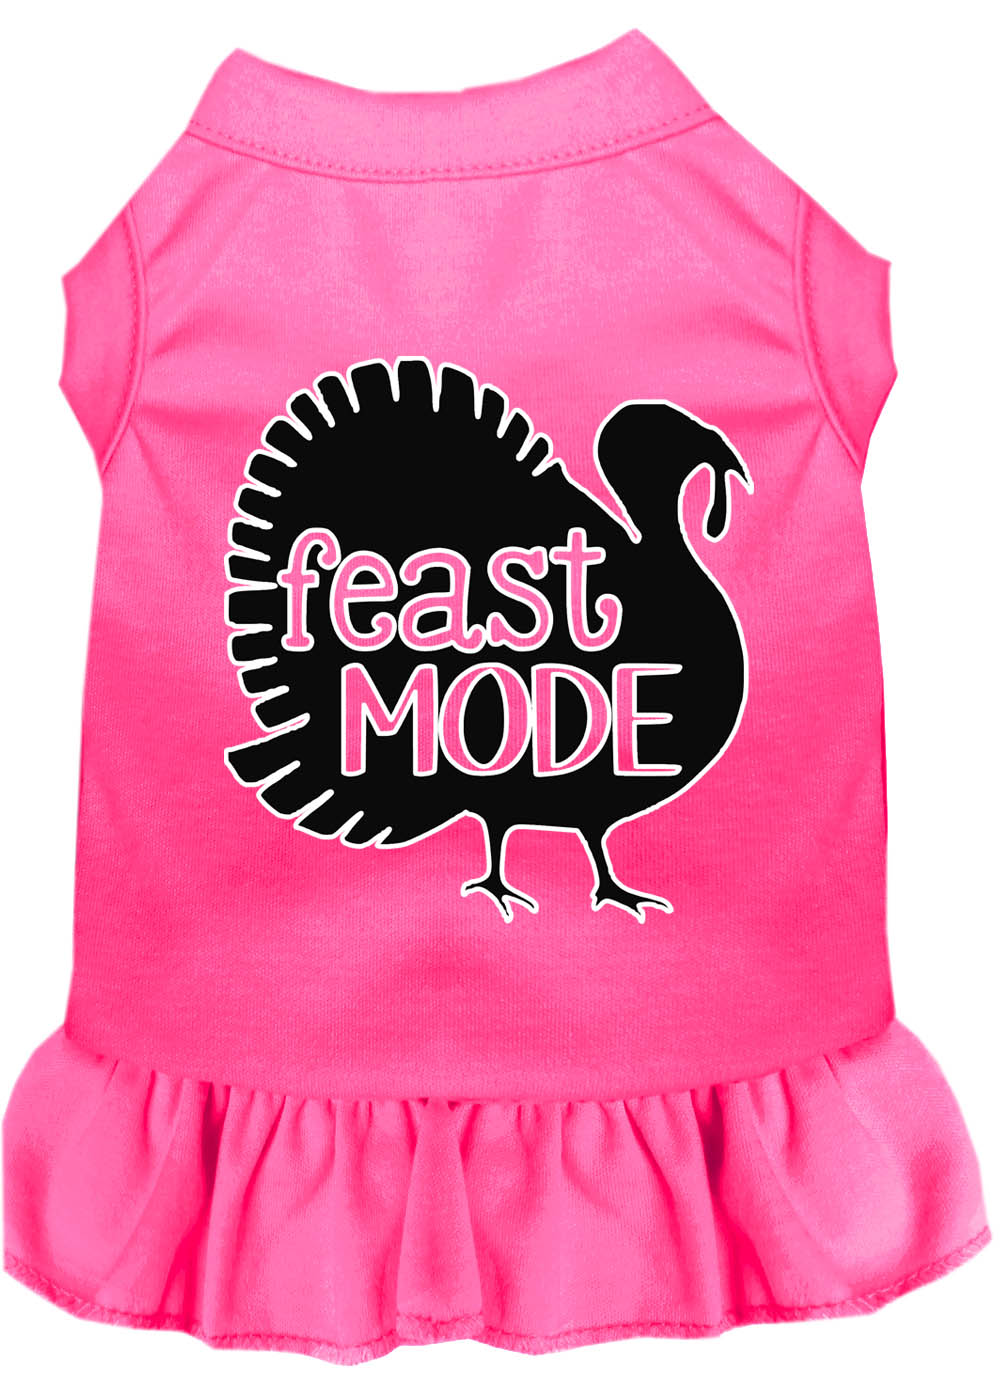 Feast Mode Screen Print Dog Dress Bright Pink XS